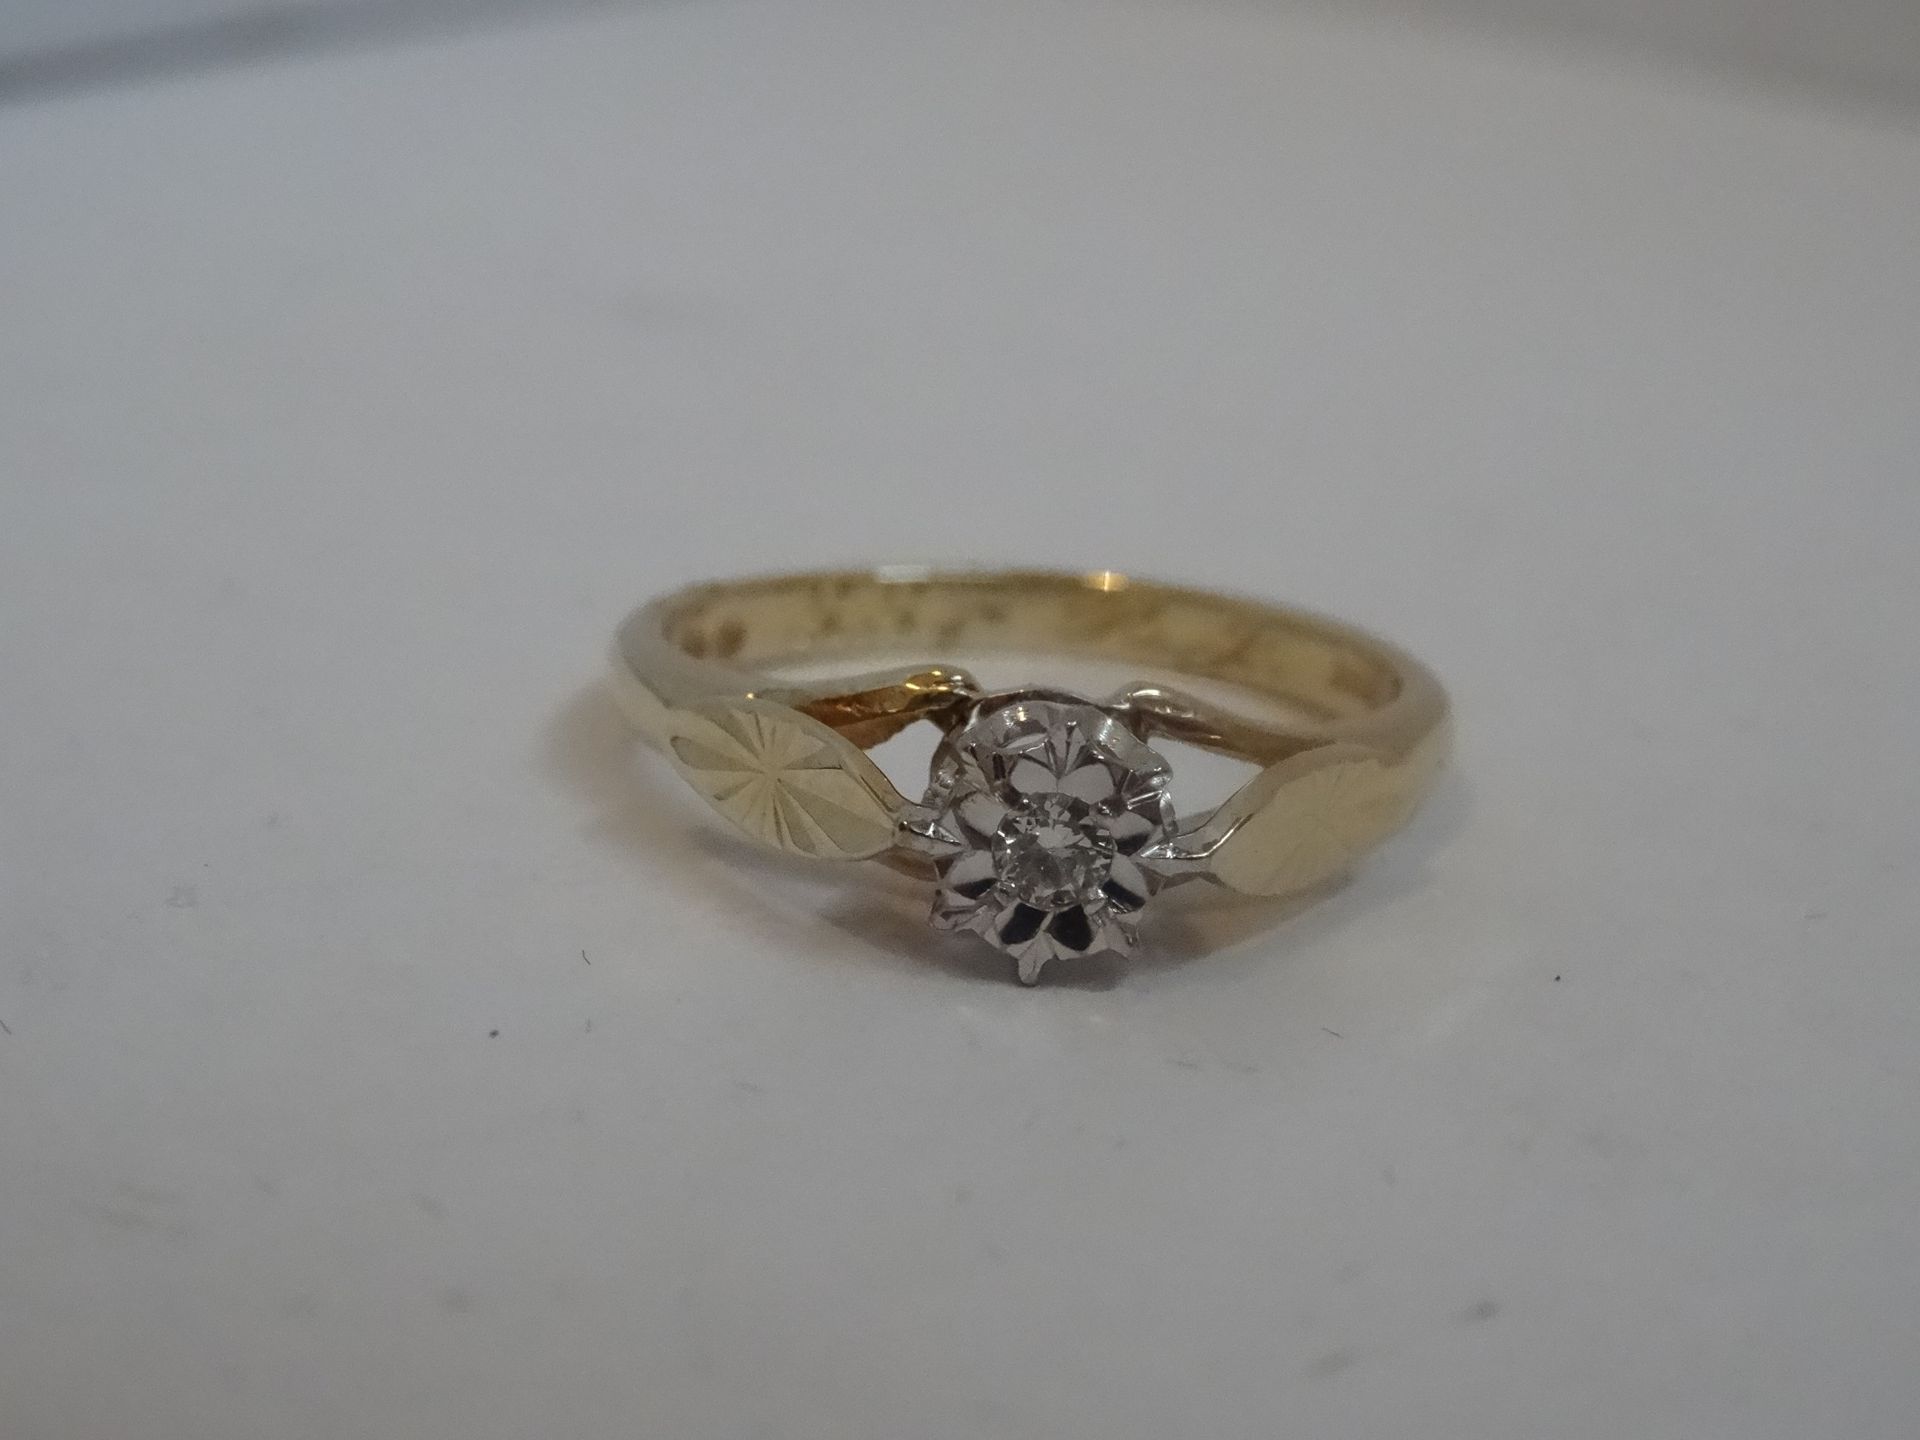 9 Carat Yellow Gold Single Stone Diamond Ring. Total Piece Weight 1.94 Grams - Image 2 of 2